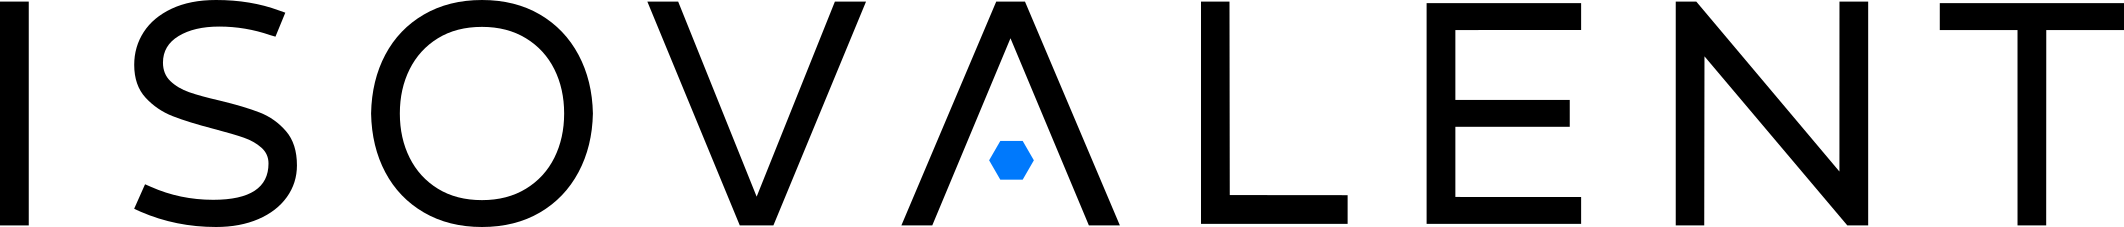 isovalent-logo.png